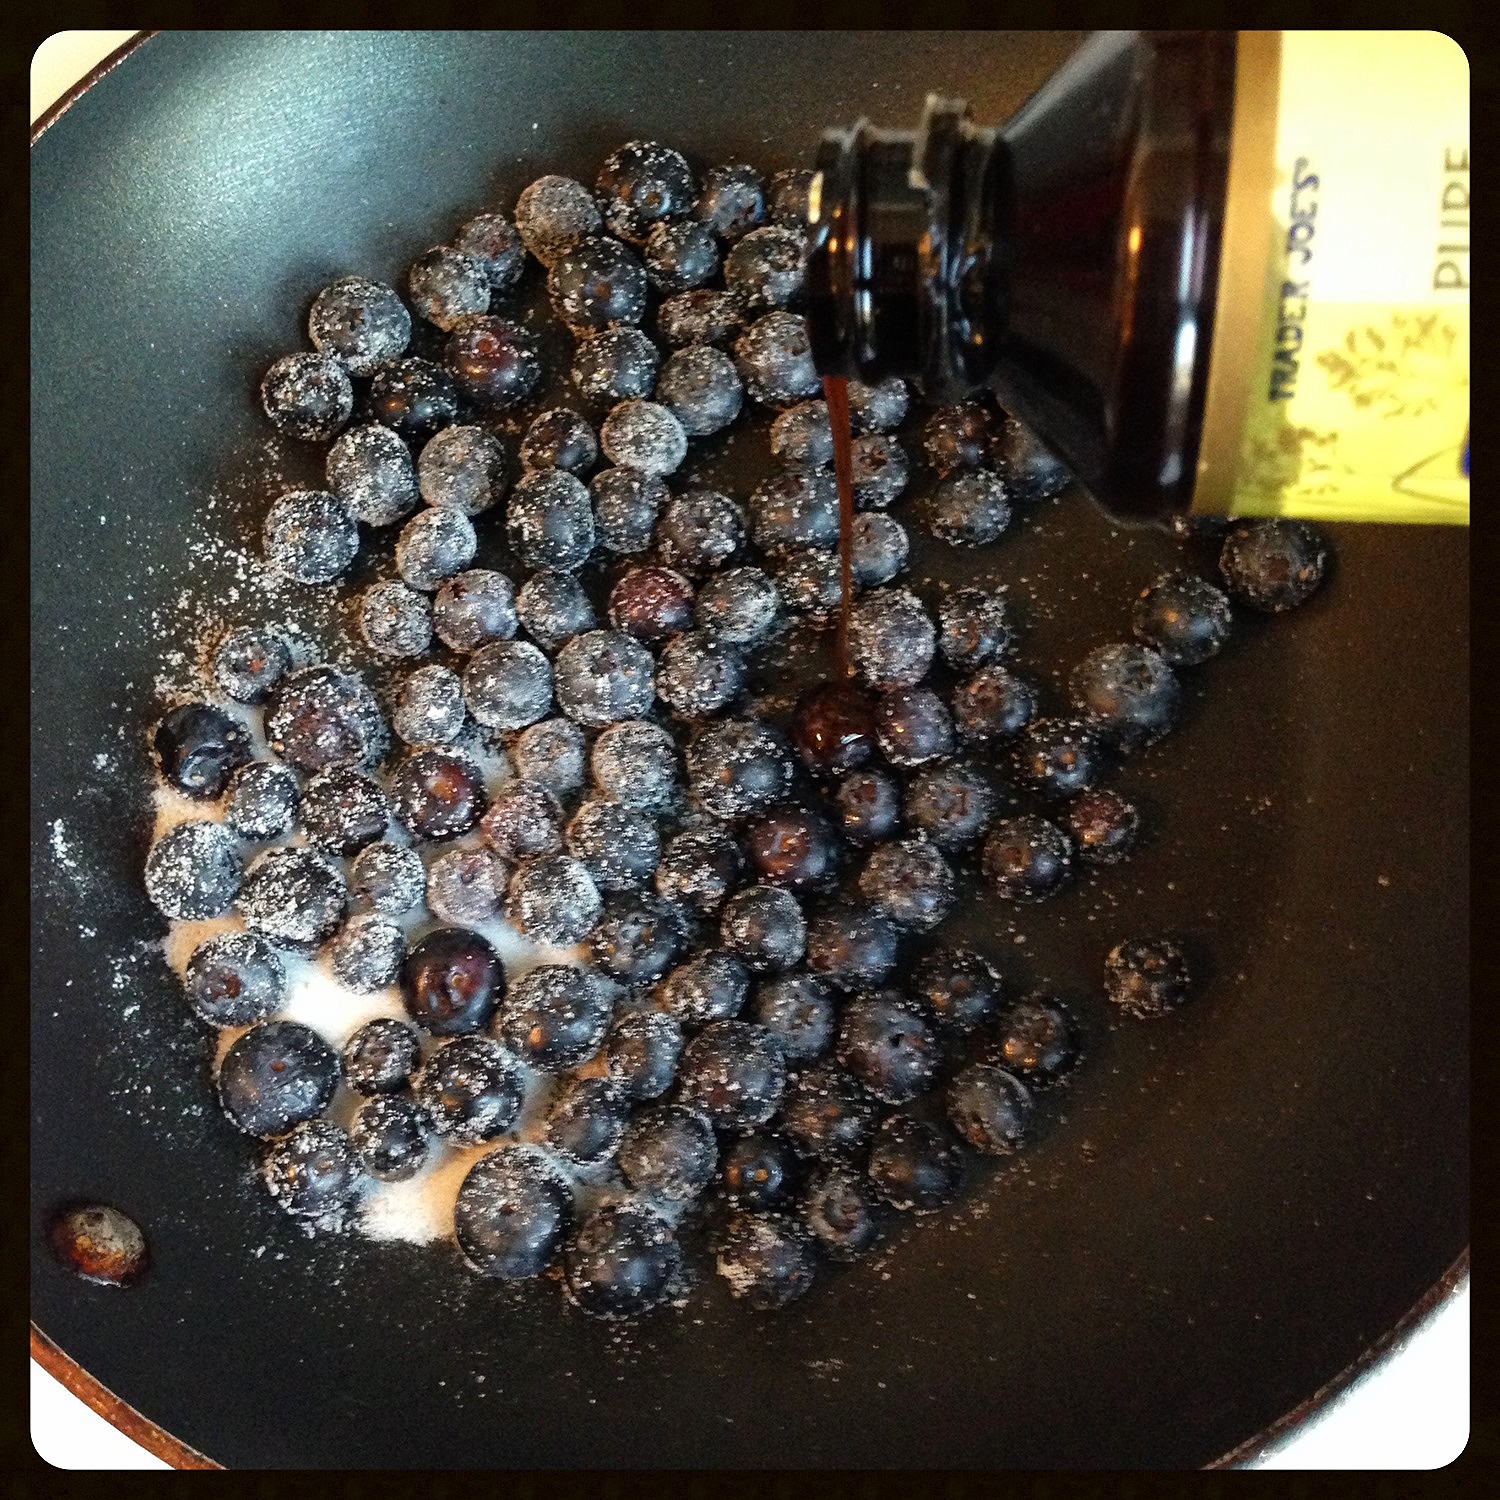 Adding Vanilla to the Blueberries